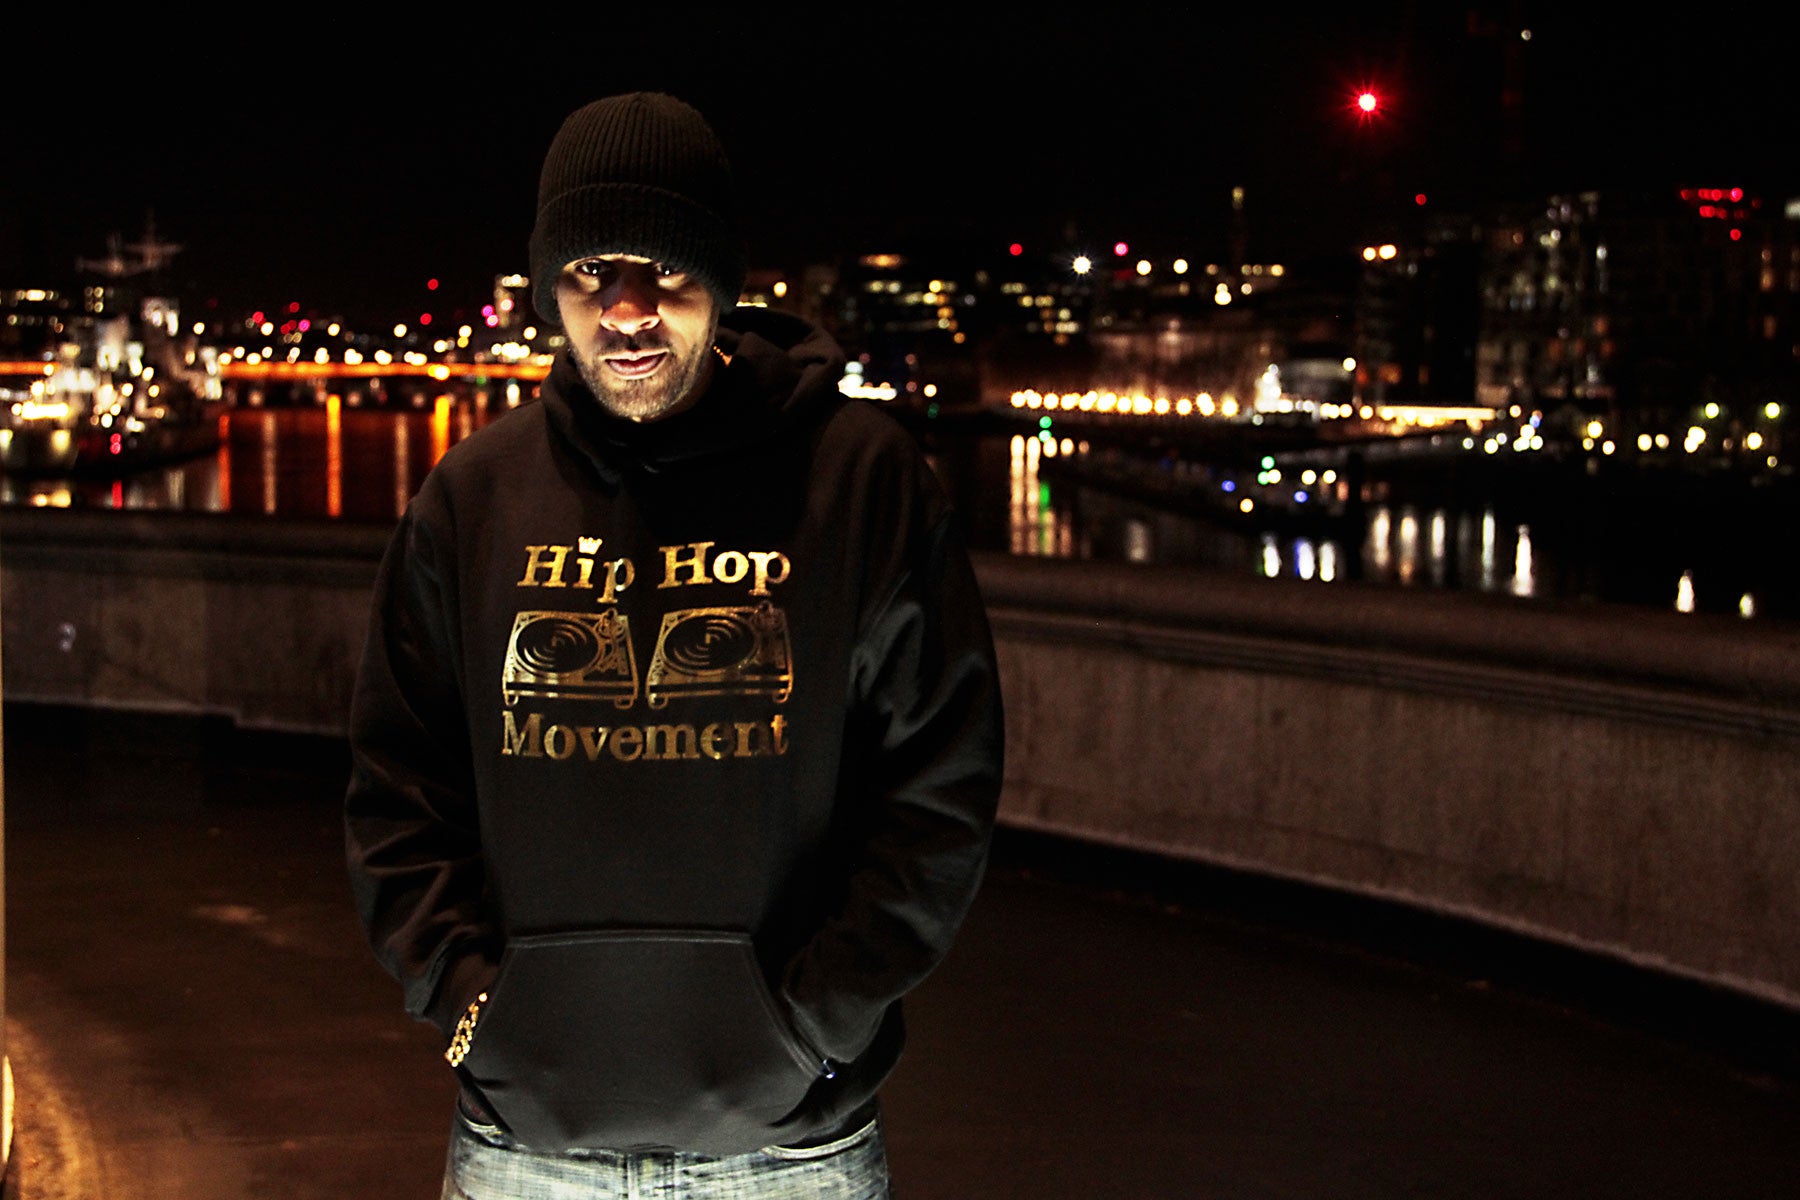 Hip Hop Movement Gold Hoodie (Black)